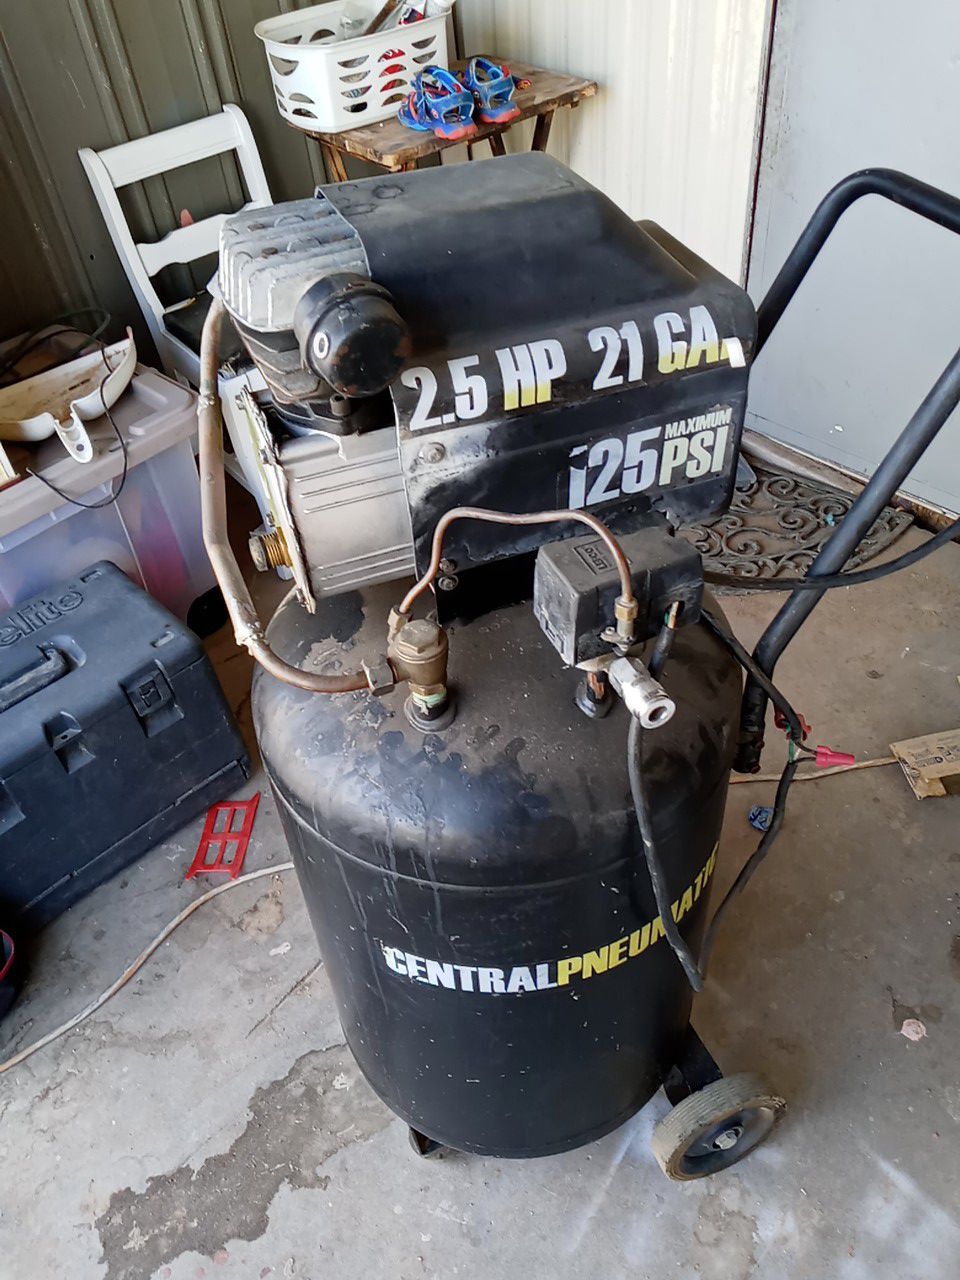 Centralpneumatic air compressor plus hand saw works good